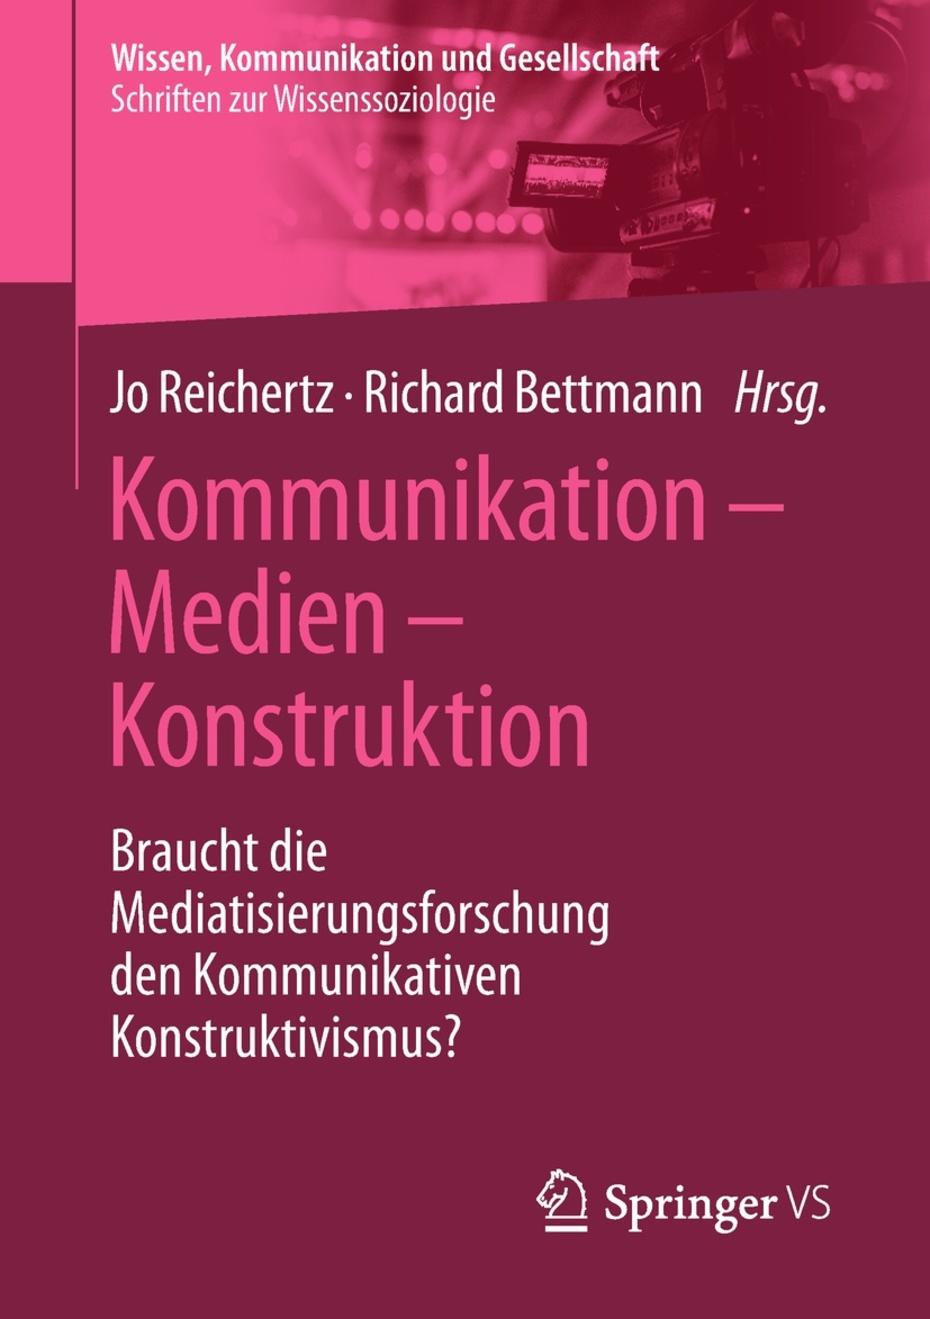 Kommunikation - Medien - Konstruktion (Cover)